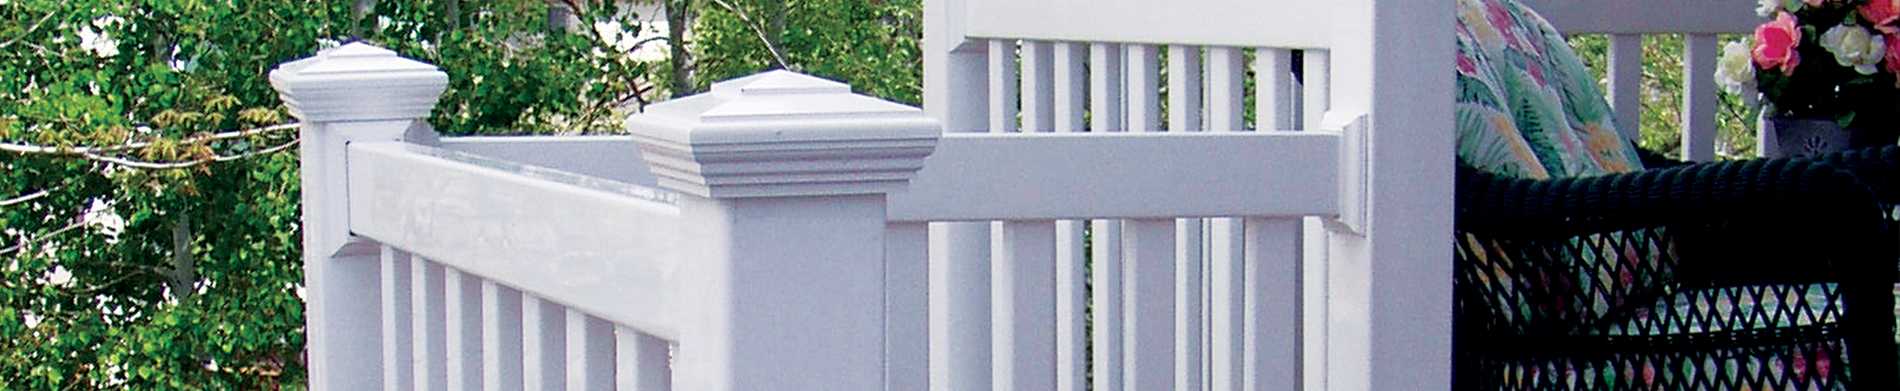 Duramax vinyl gate manufacturers get you long-lasting, easy maintenance weatherproof gates